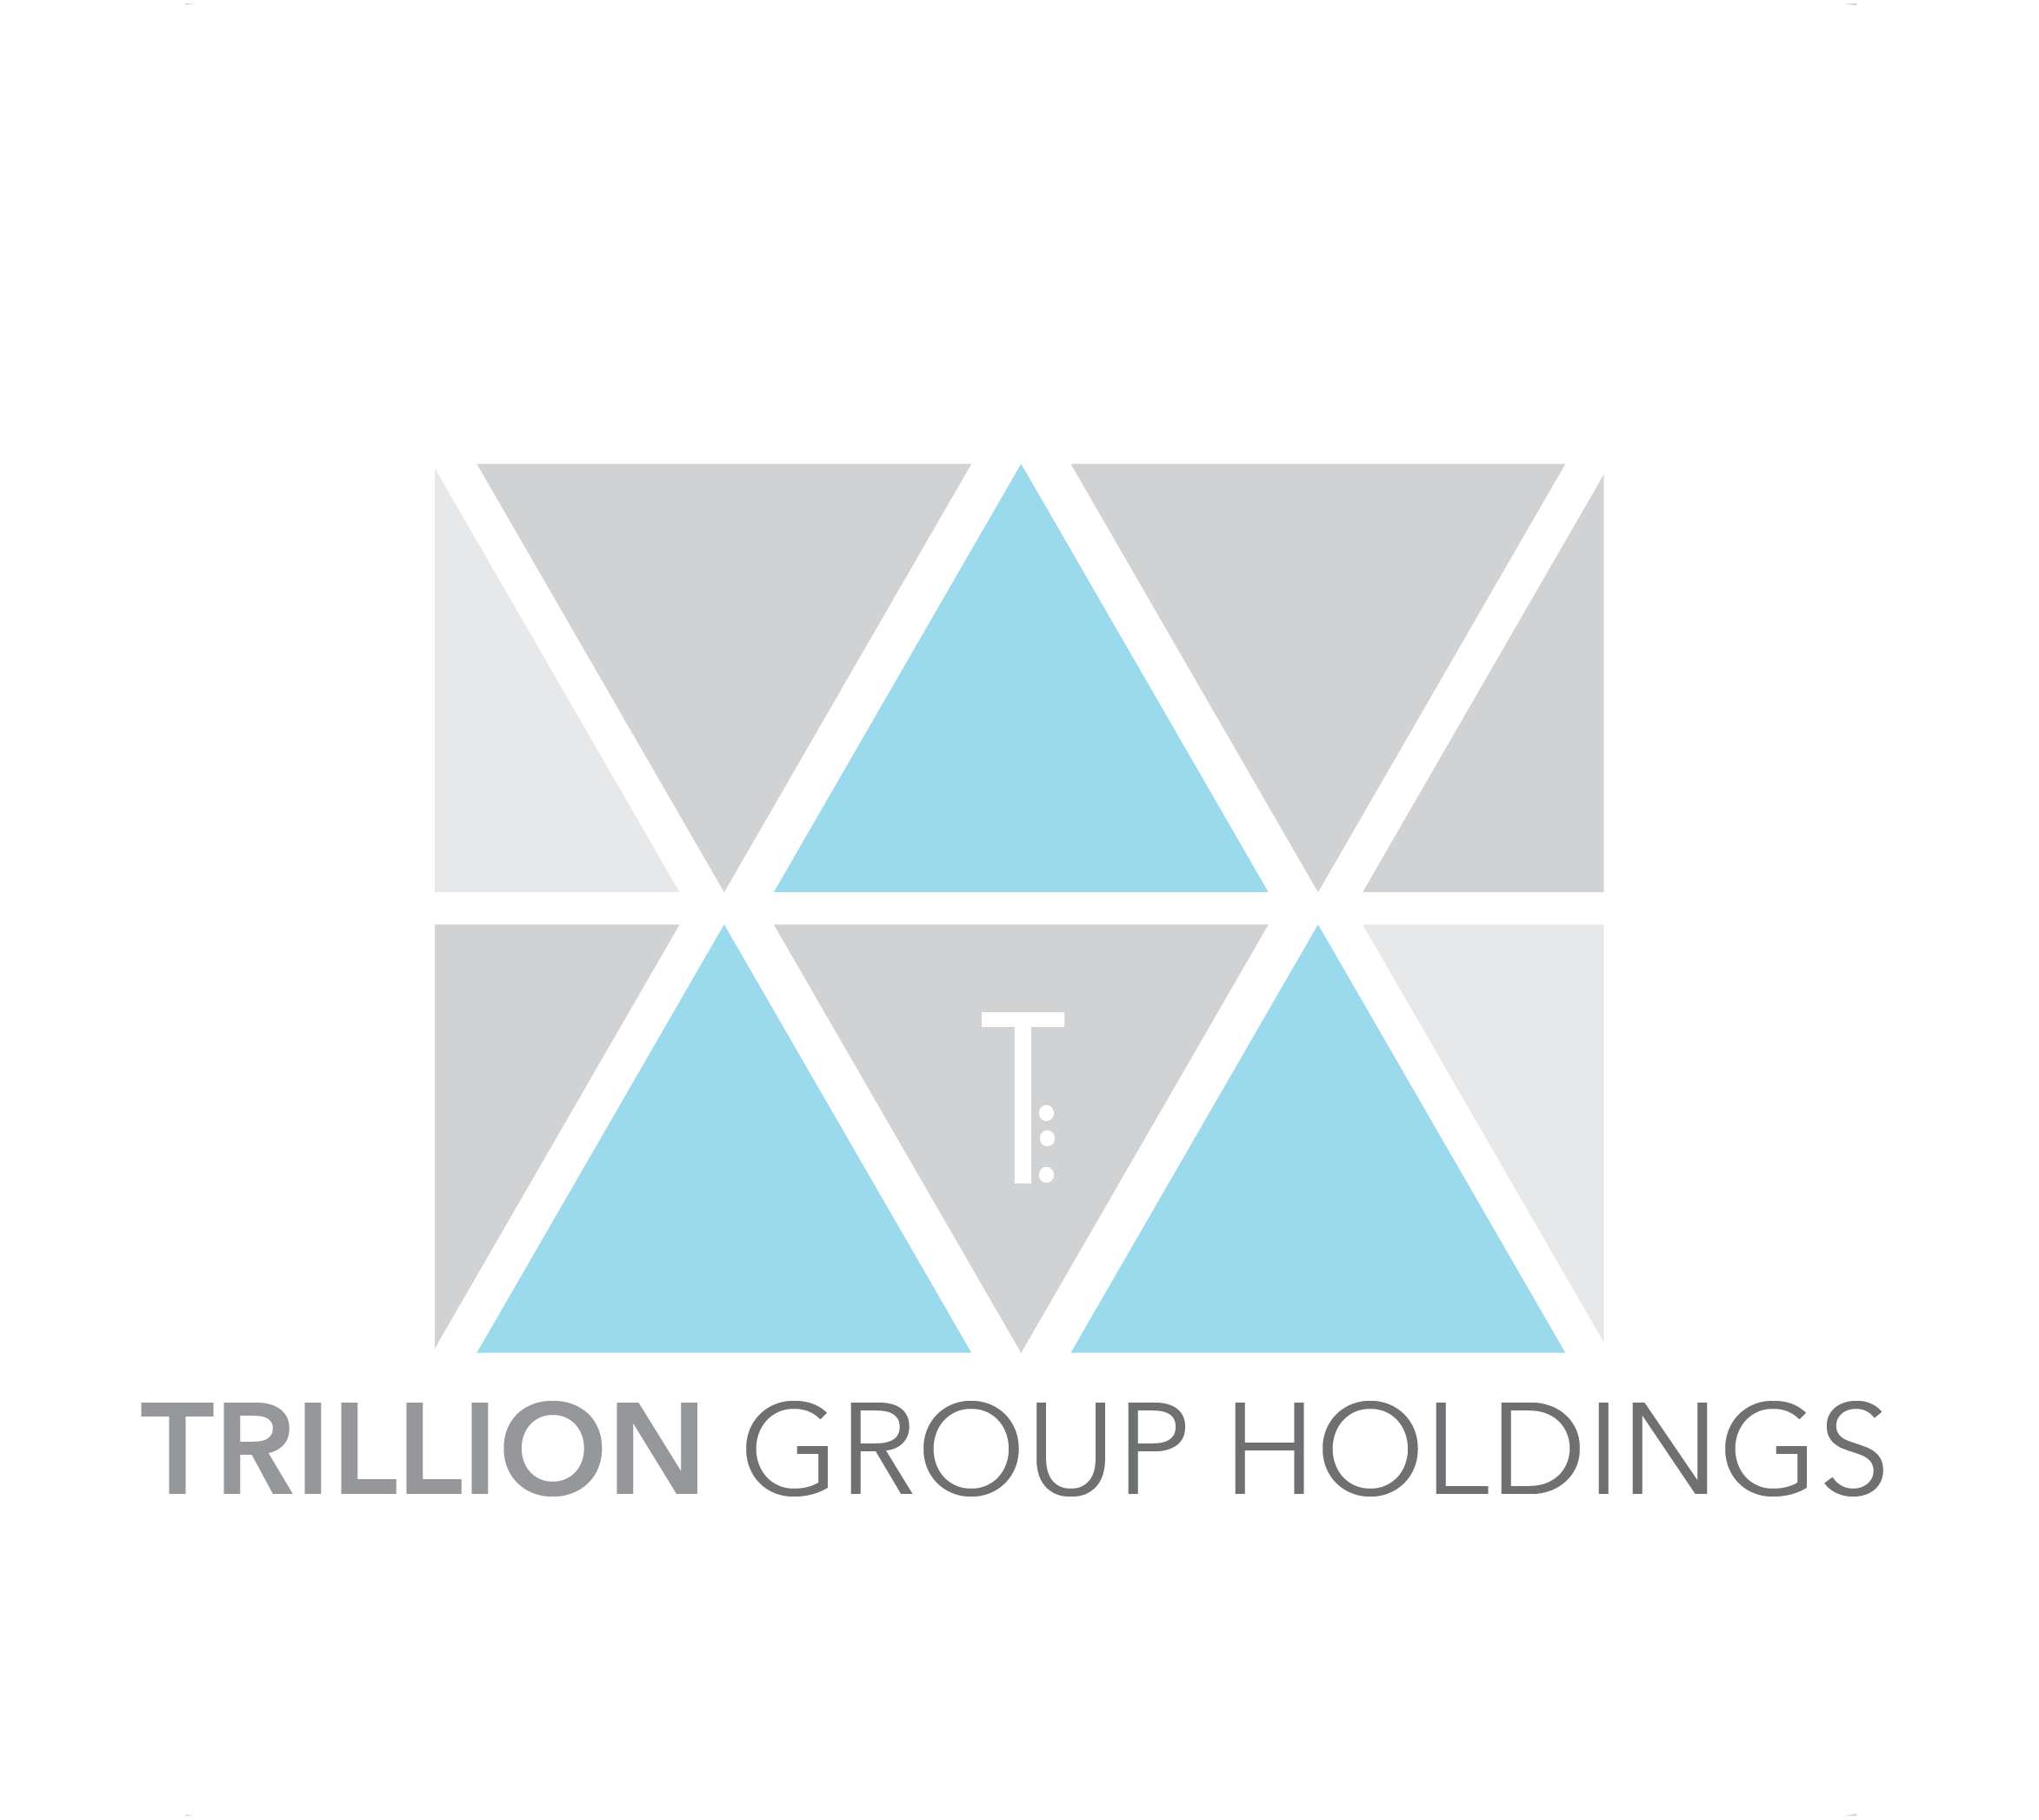 Trillion Group Holdings Pte Ltd